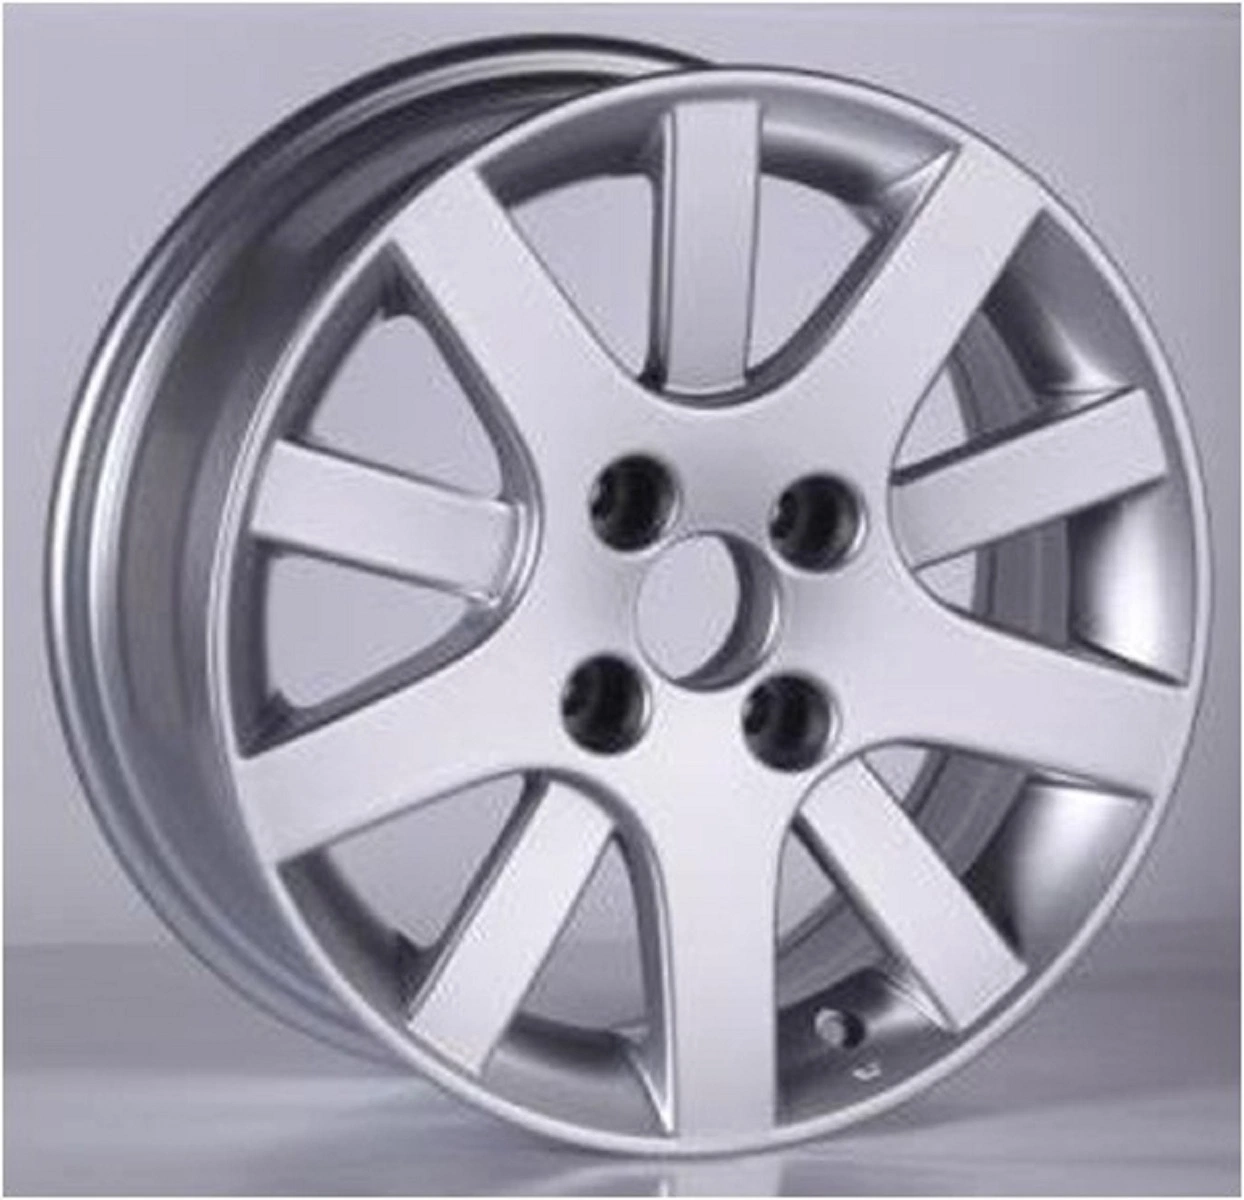 N5104 JXD Brand Auto Spare Parts Alloy Wheel Rim Replica Car Wheel for Peugeot 207